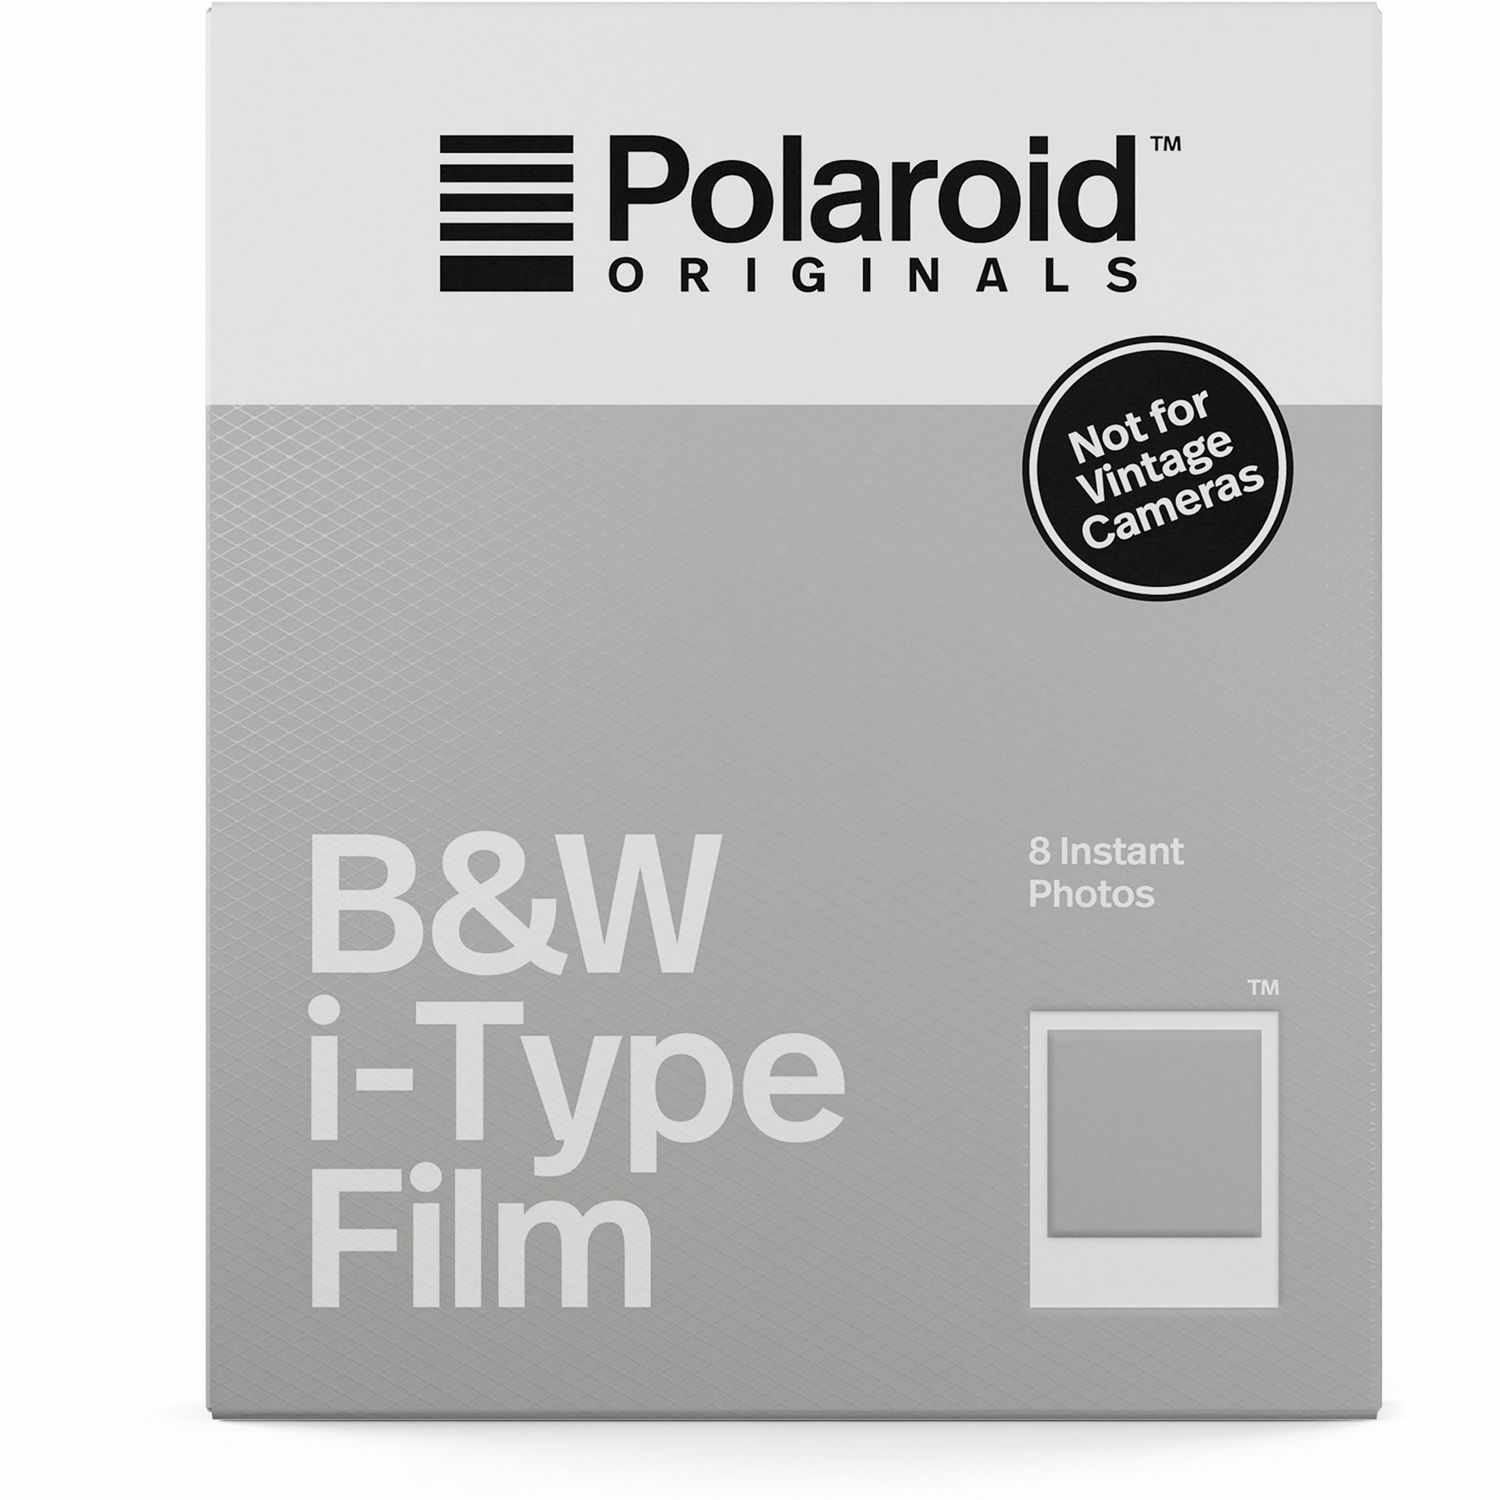 Polaroid Originals B&W Film for i-Type Cameras papir za crno-bijele fotografije za Instant fotoaparate (004669)